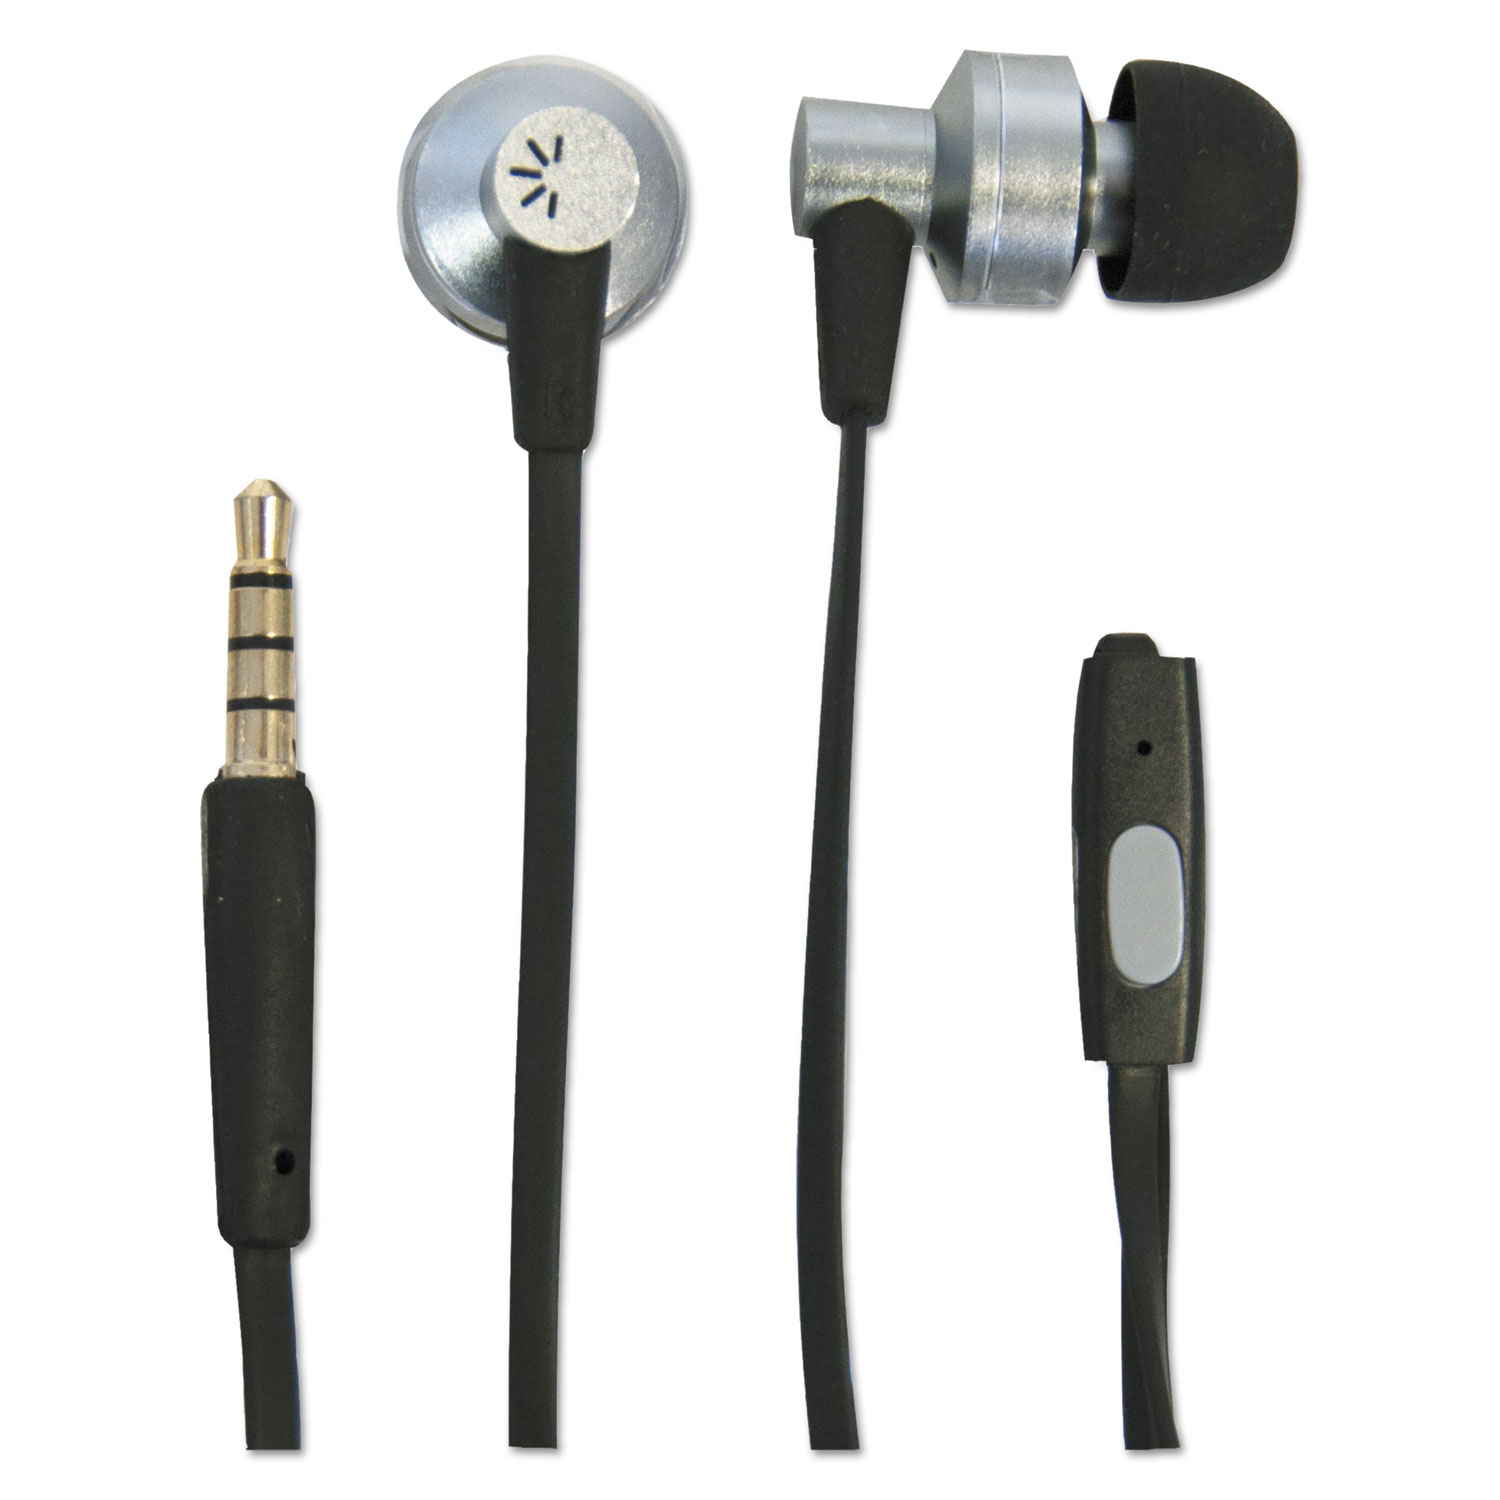  Case Logic CL-AU-EB-119-BK 400 Series Earbuds, 4 ft Cord, Black/Silver (BTHCLSTHD400) 